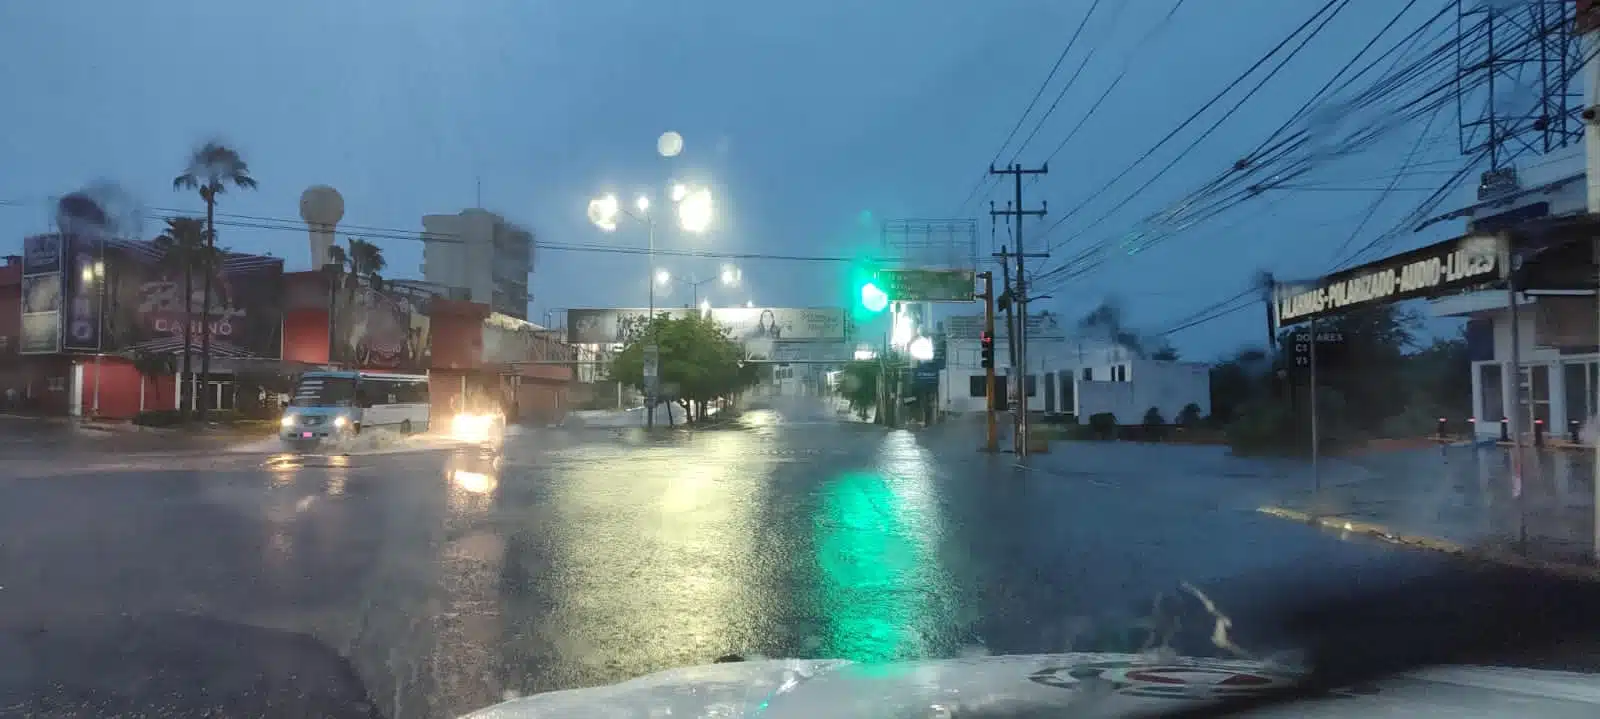 calle inundada en Sinaloa